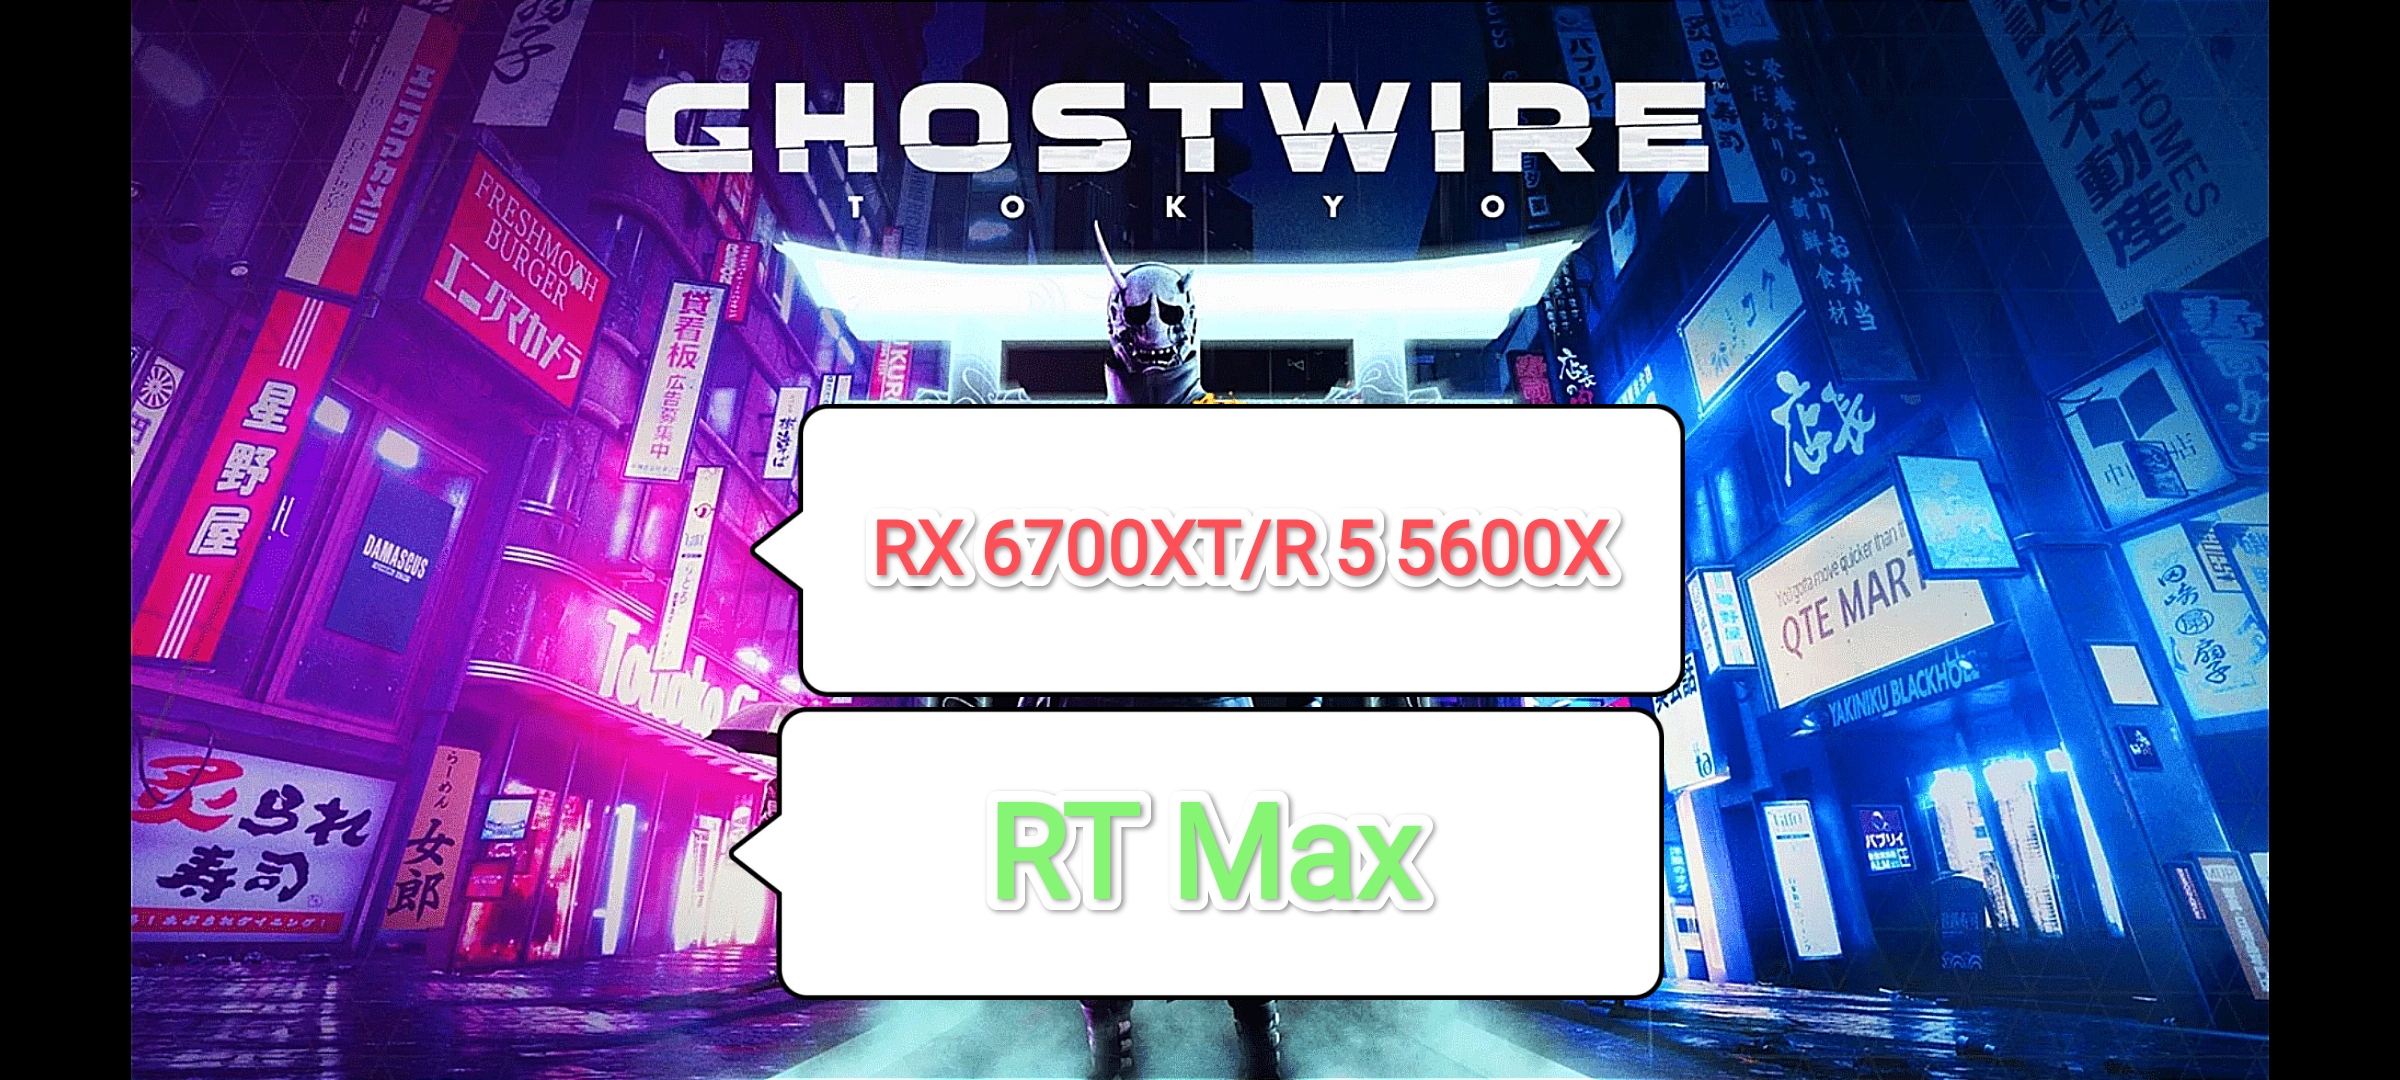 Ghostwire Tokyo v.1.009 - тест игры на RX 6700 XT/R 5 5600 X